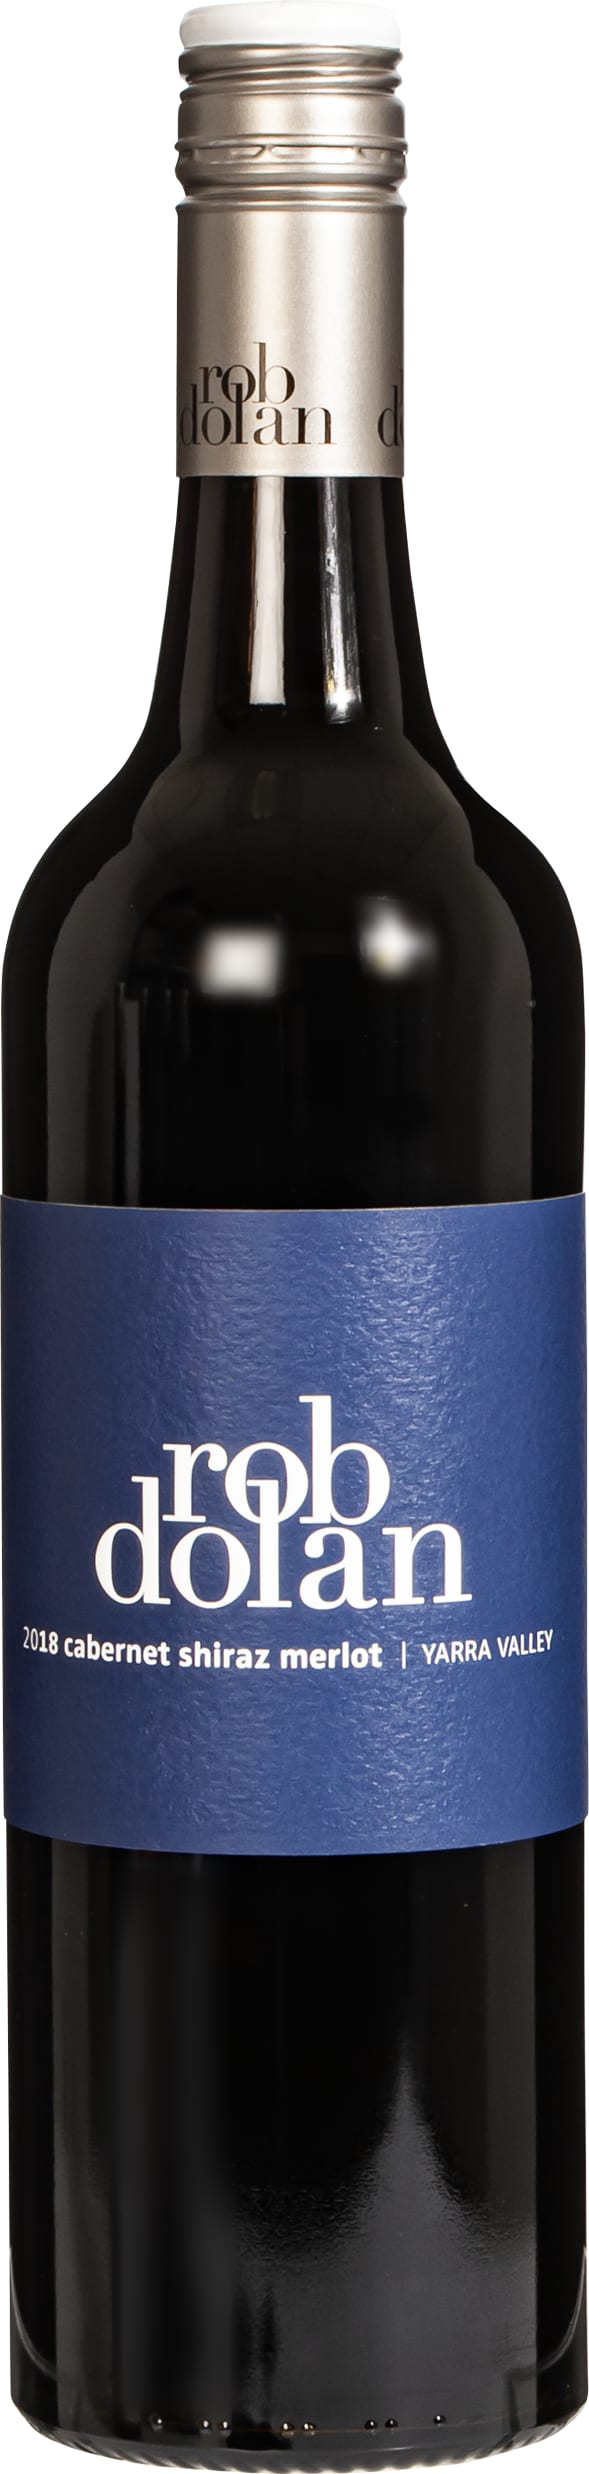 Rob Dolan Cabernet Shiraz Merlot Rob Dolan 2018 75cl - Buy Rob Dolan Wines from GREAT WINES DIRECT wine shop